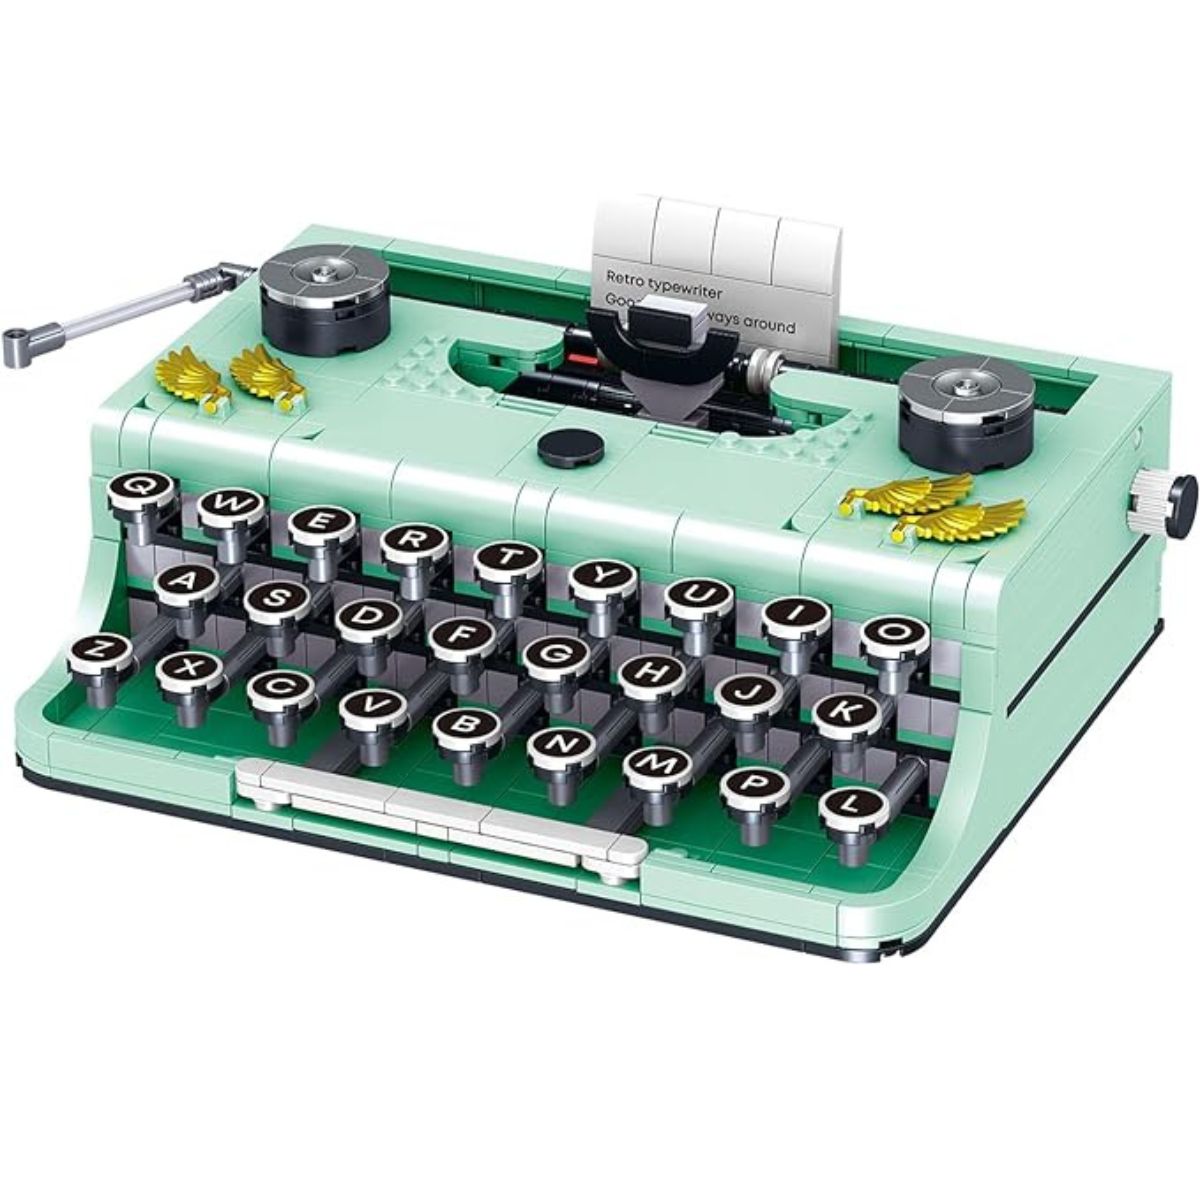 Classic Retro Typewriter Toys